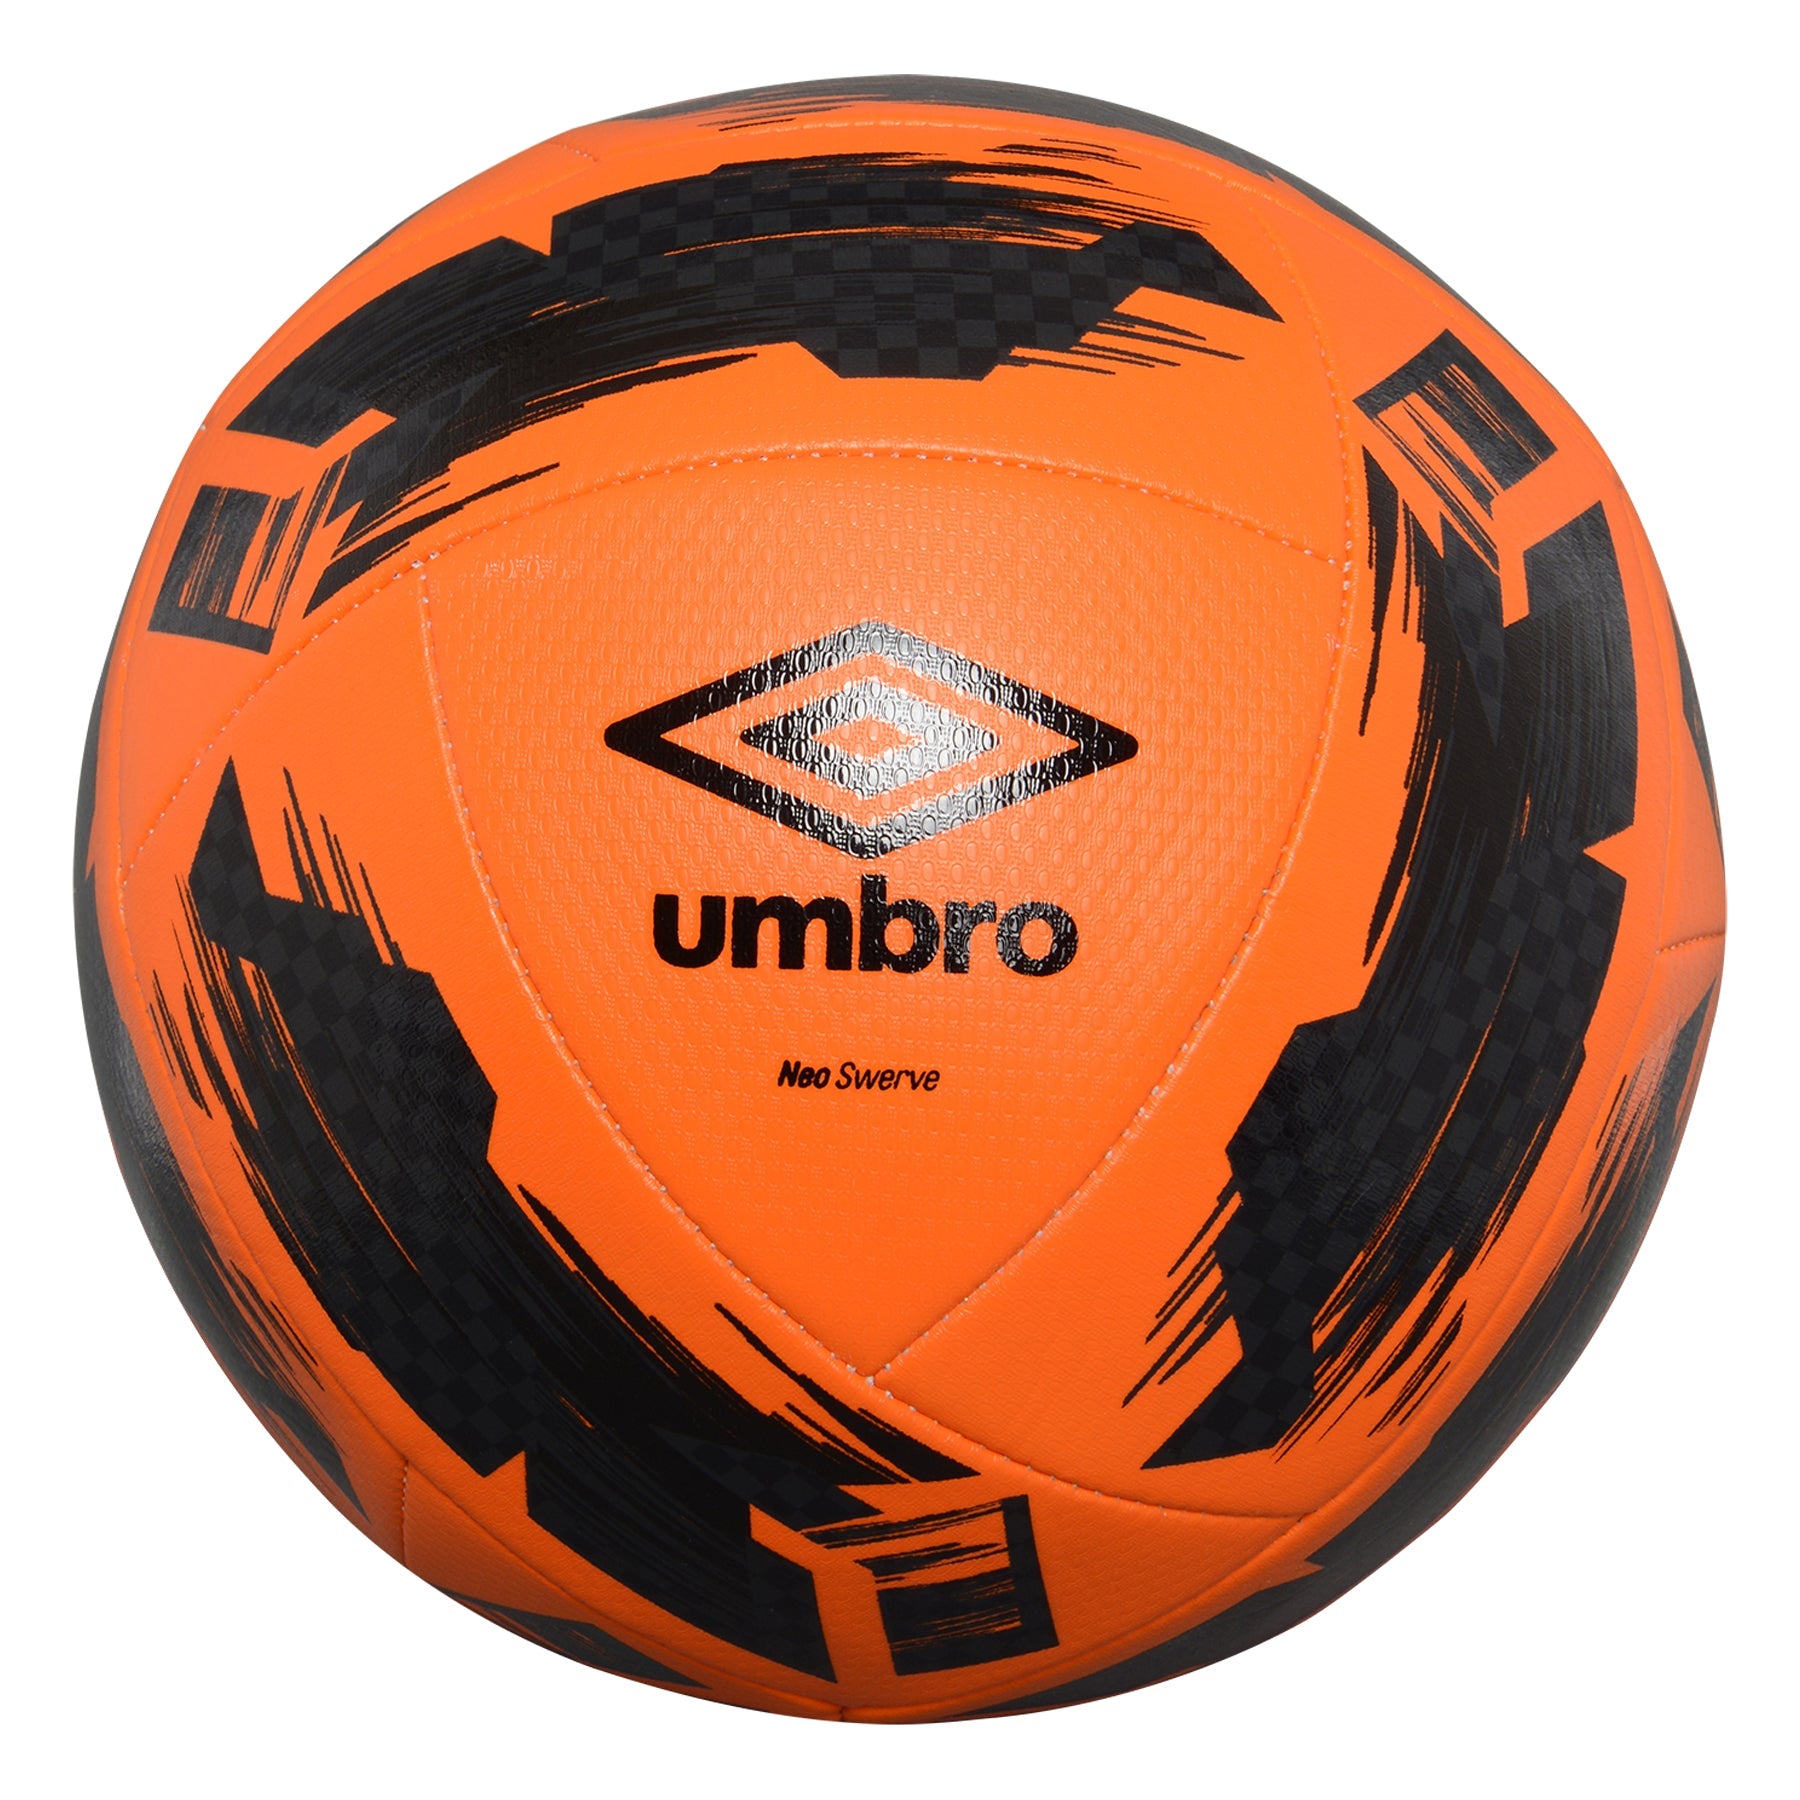 Umbro Neo Swerve Soccer Ball Orange/Black